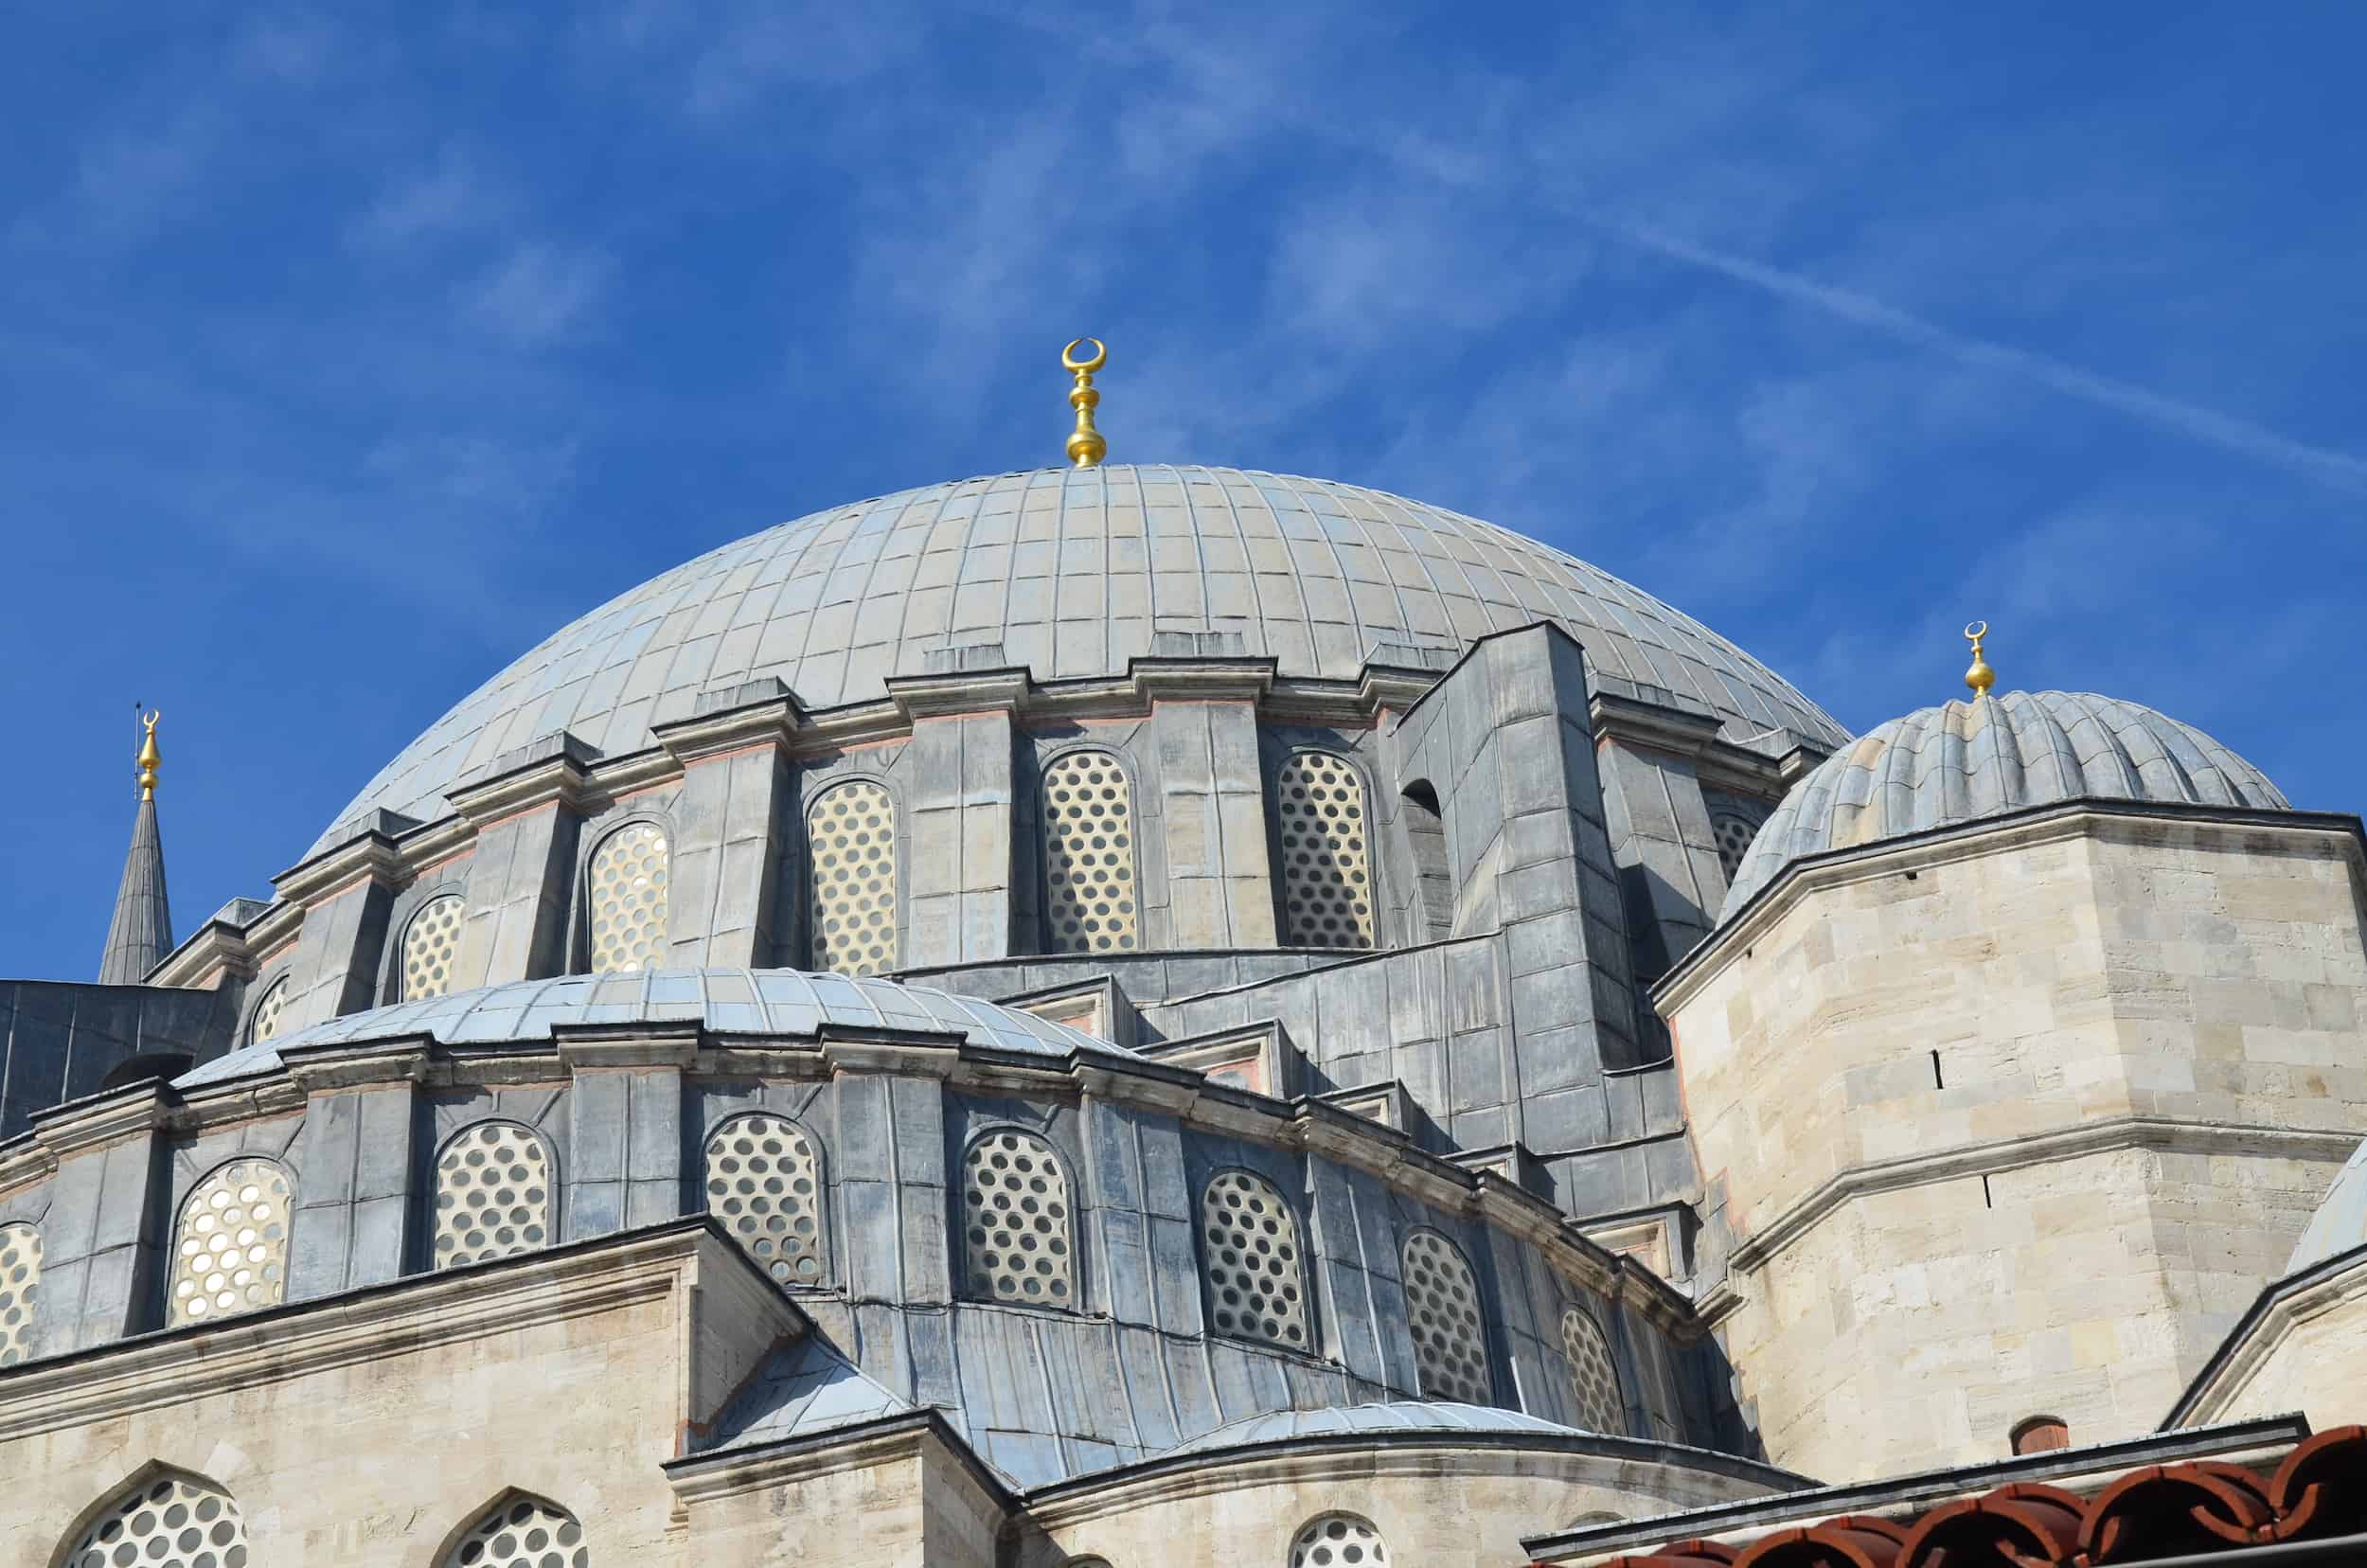 Dome of the Süleymaniye Mosque in Istanbul, Turkey